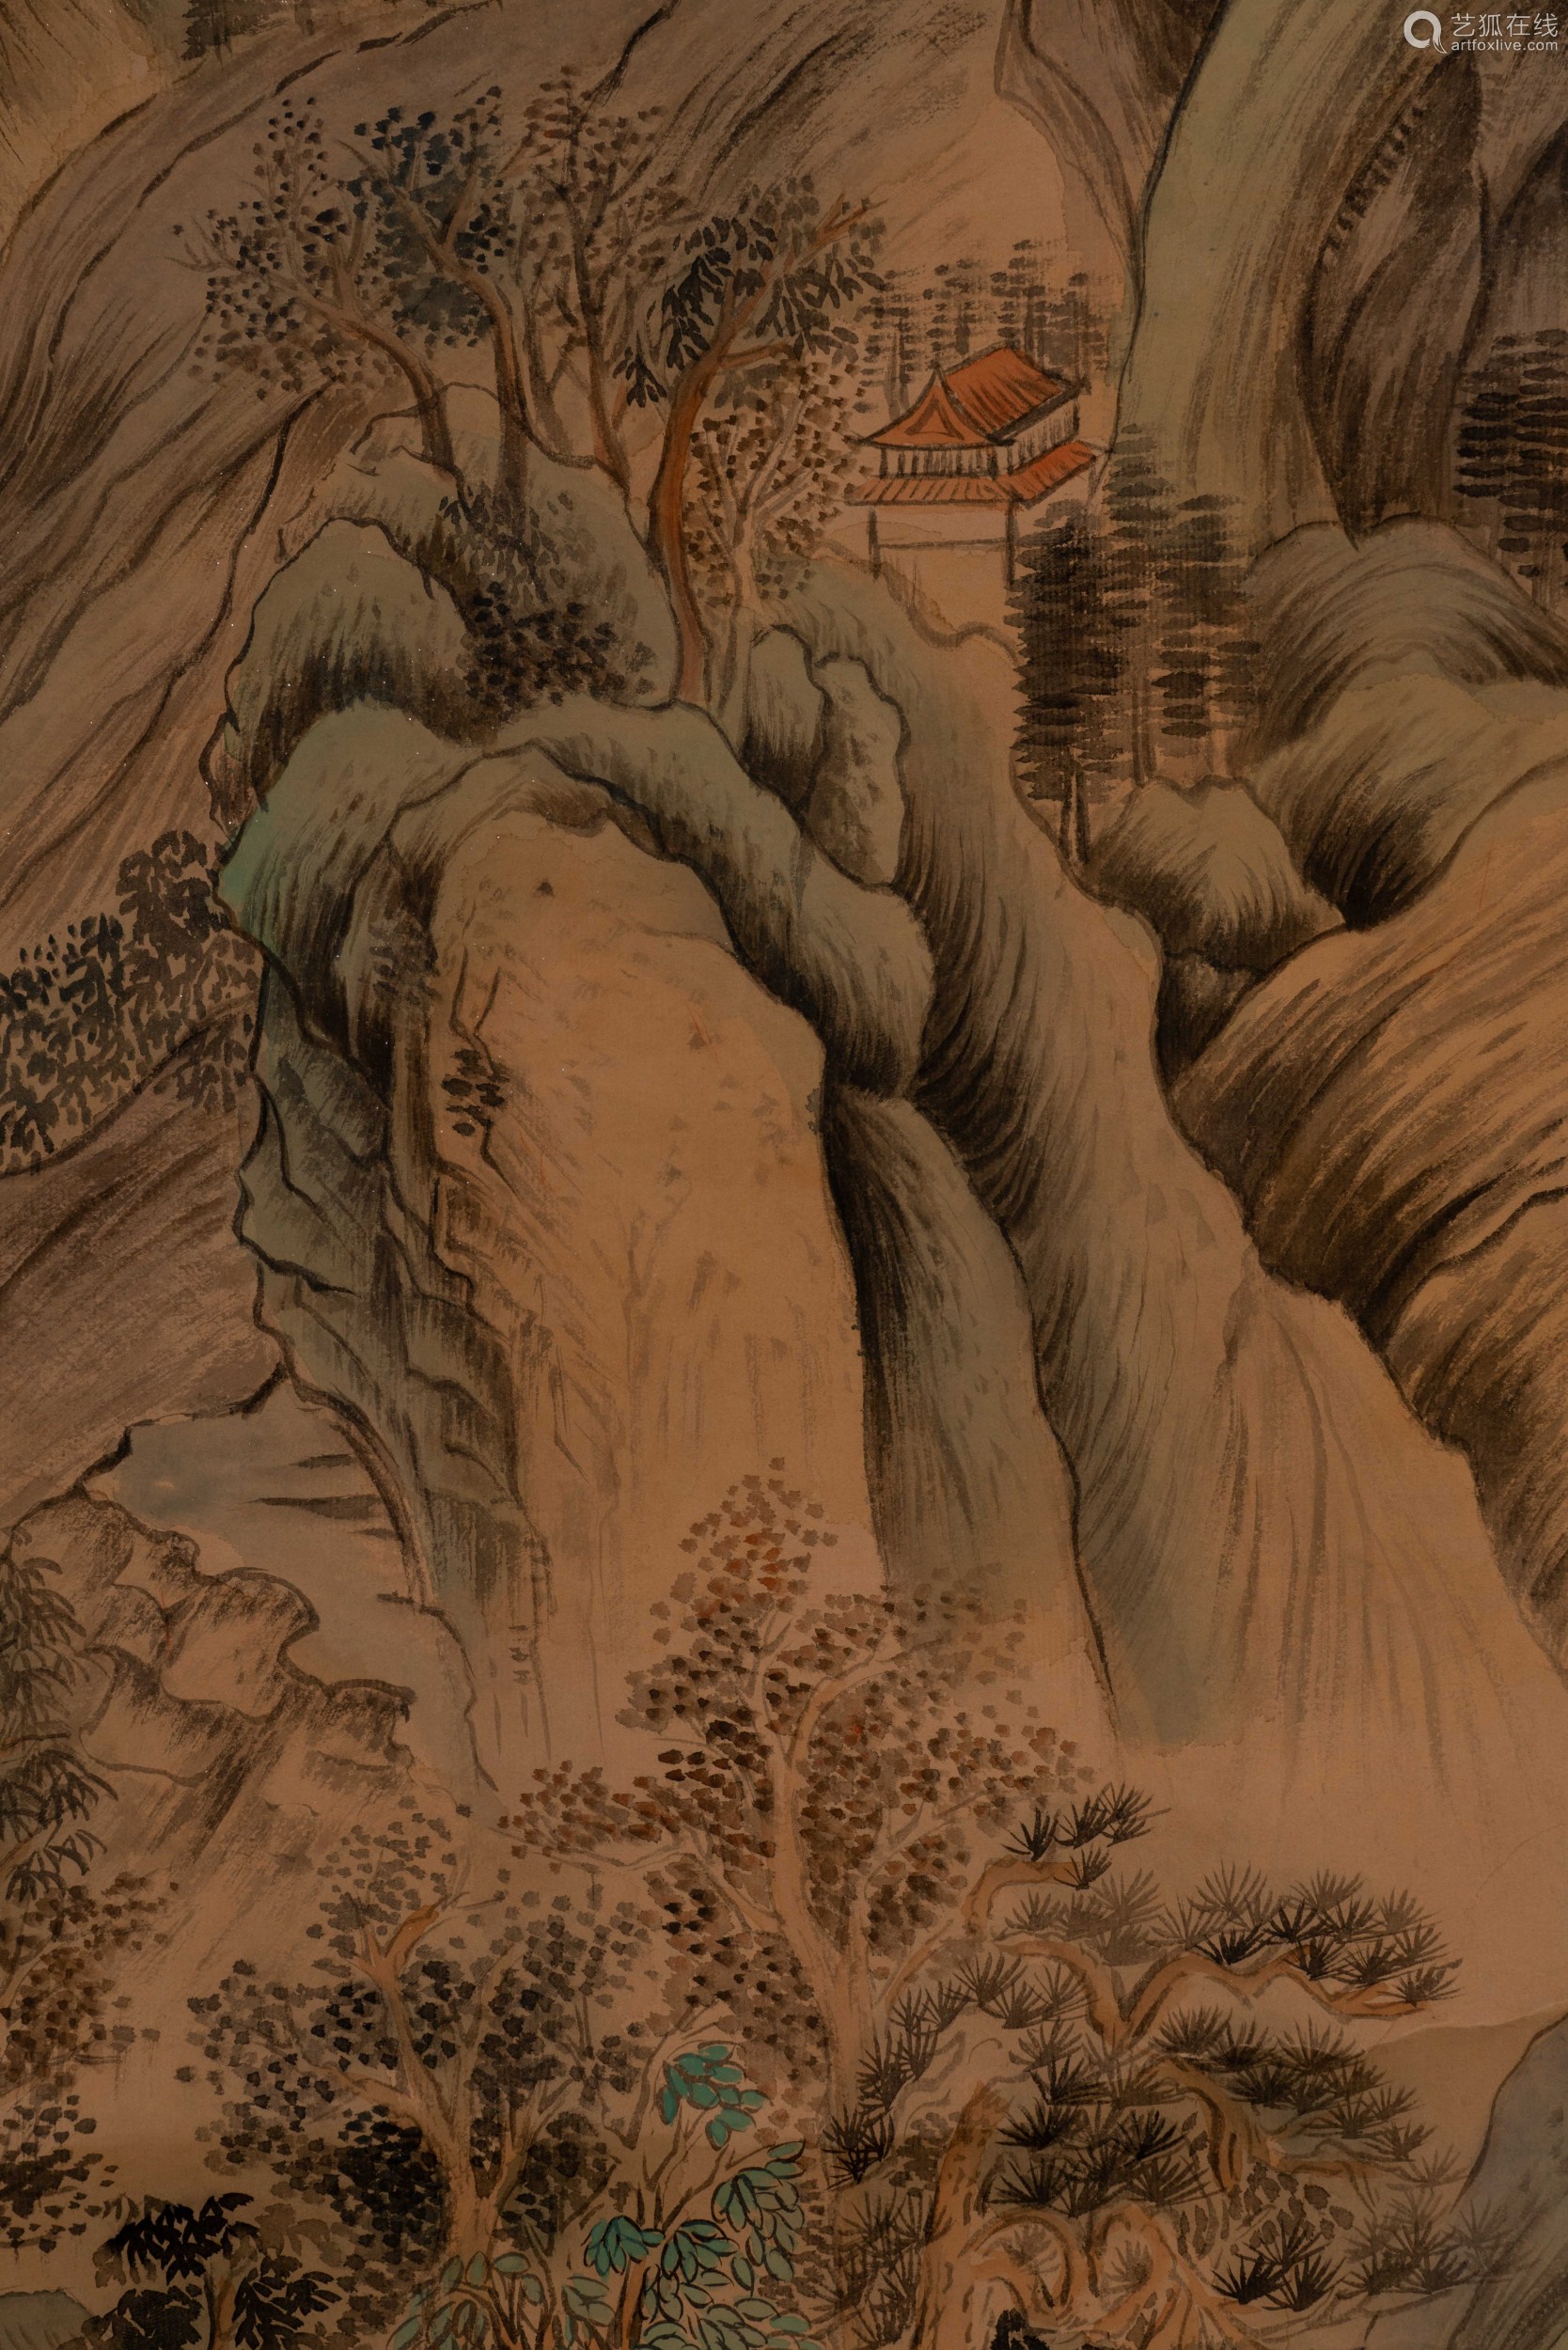 Wang Shimin's landscape vertical axis